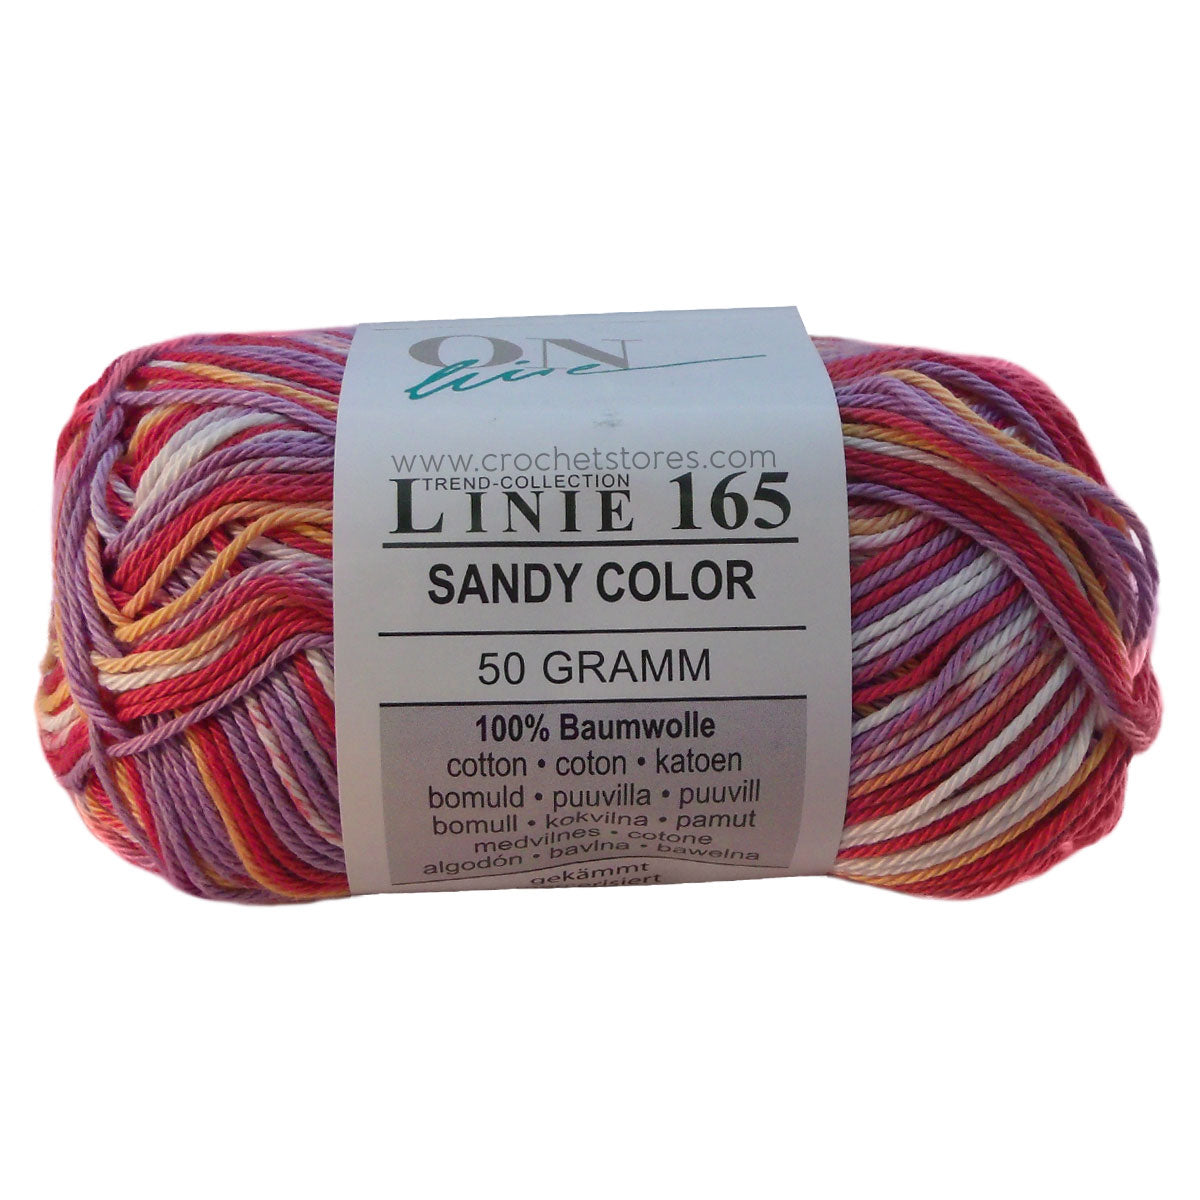 SANDY - Crochetstores110165-01104014366145554